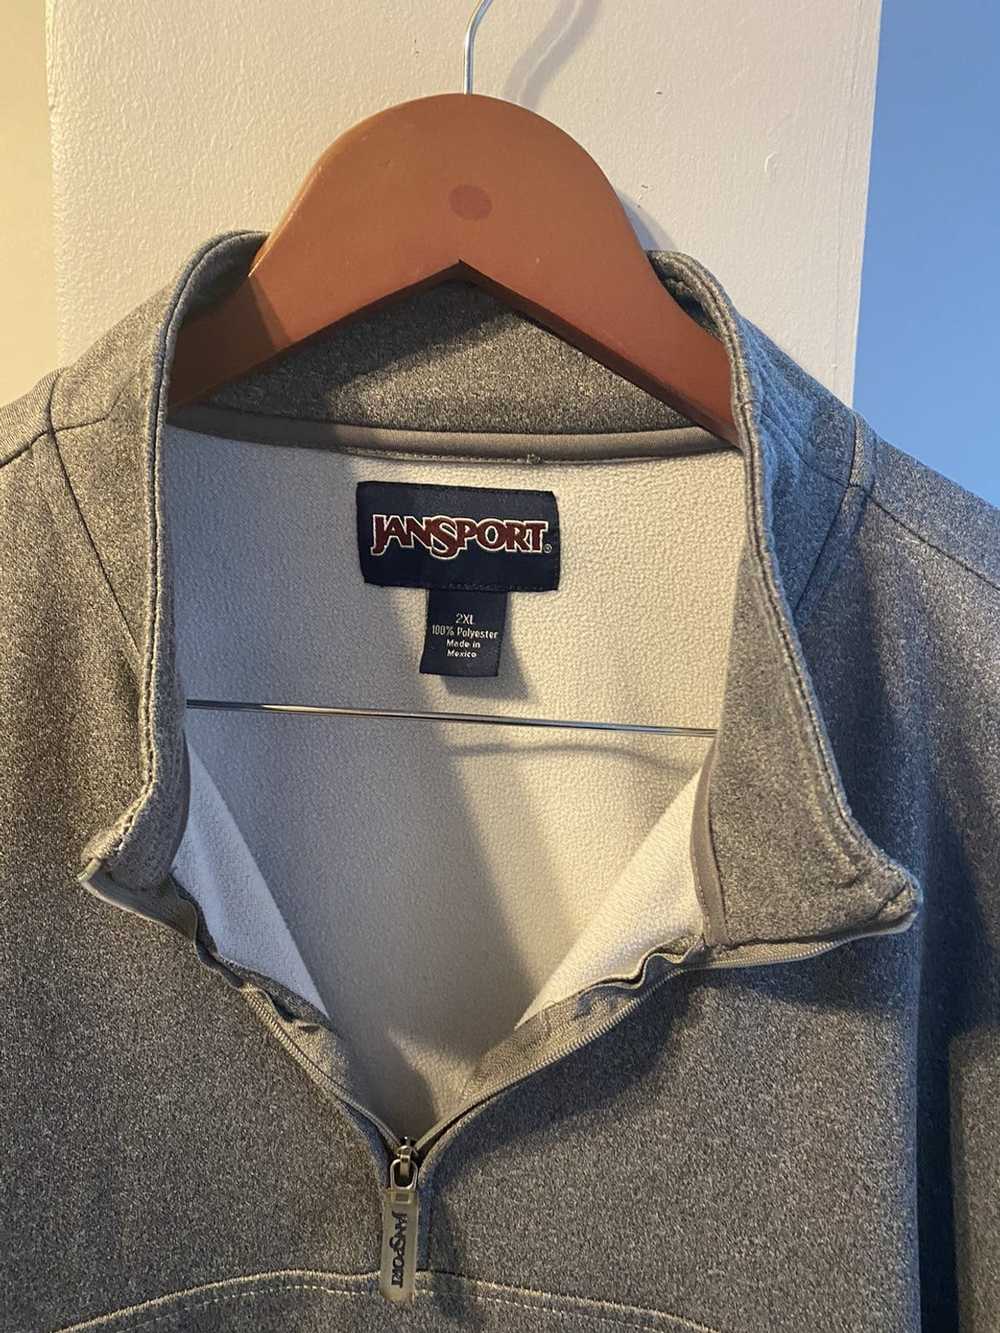 Jansport JanSport Pullover Sweatshirt Jacket 1/4 … - image 4